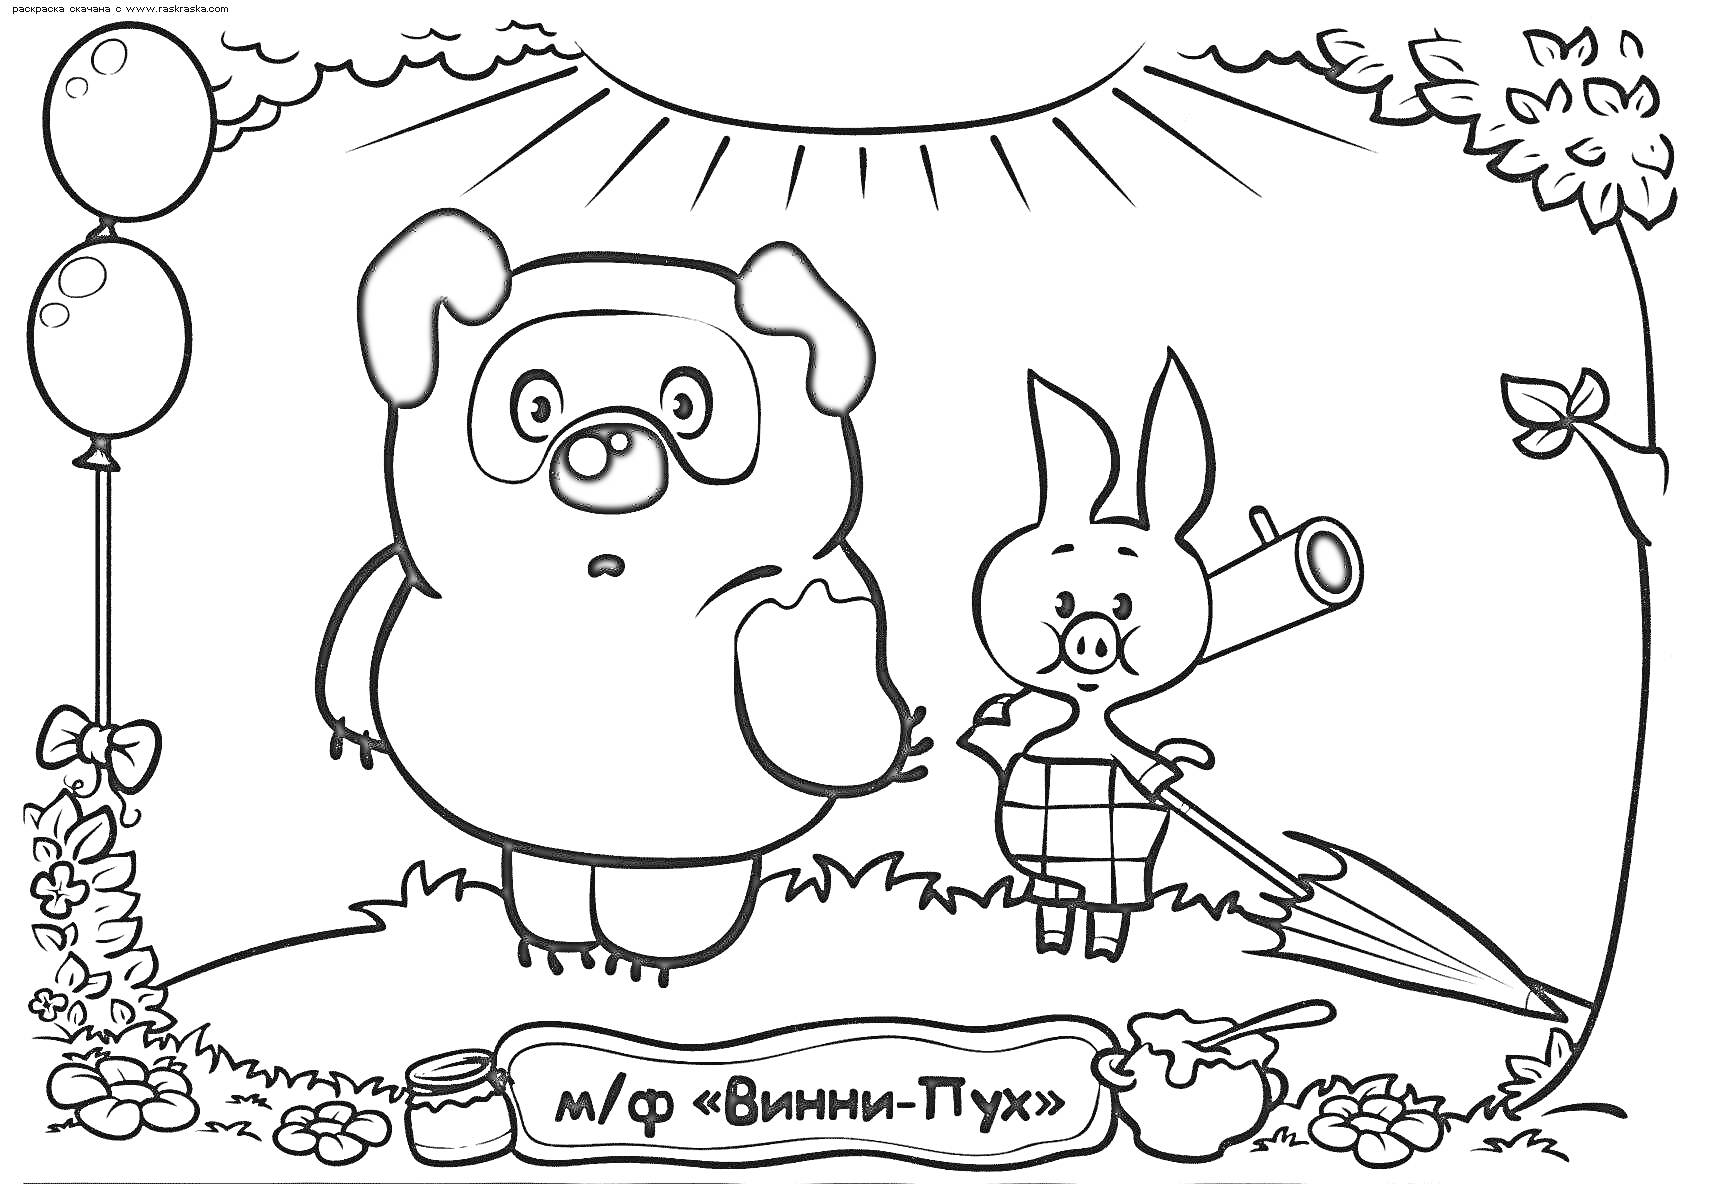 Раскраска Винни-Пух и Пятачок на поляне с шариками и горшком мёда